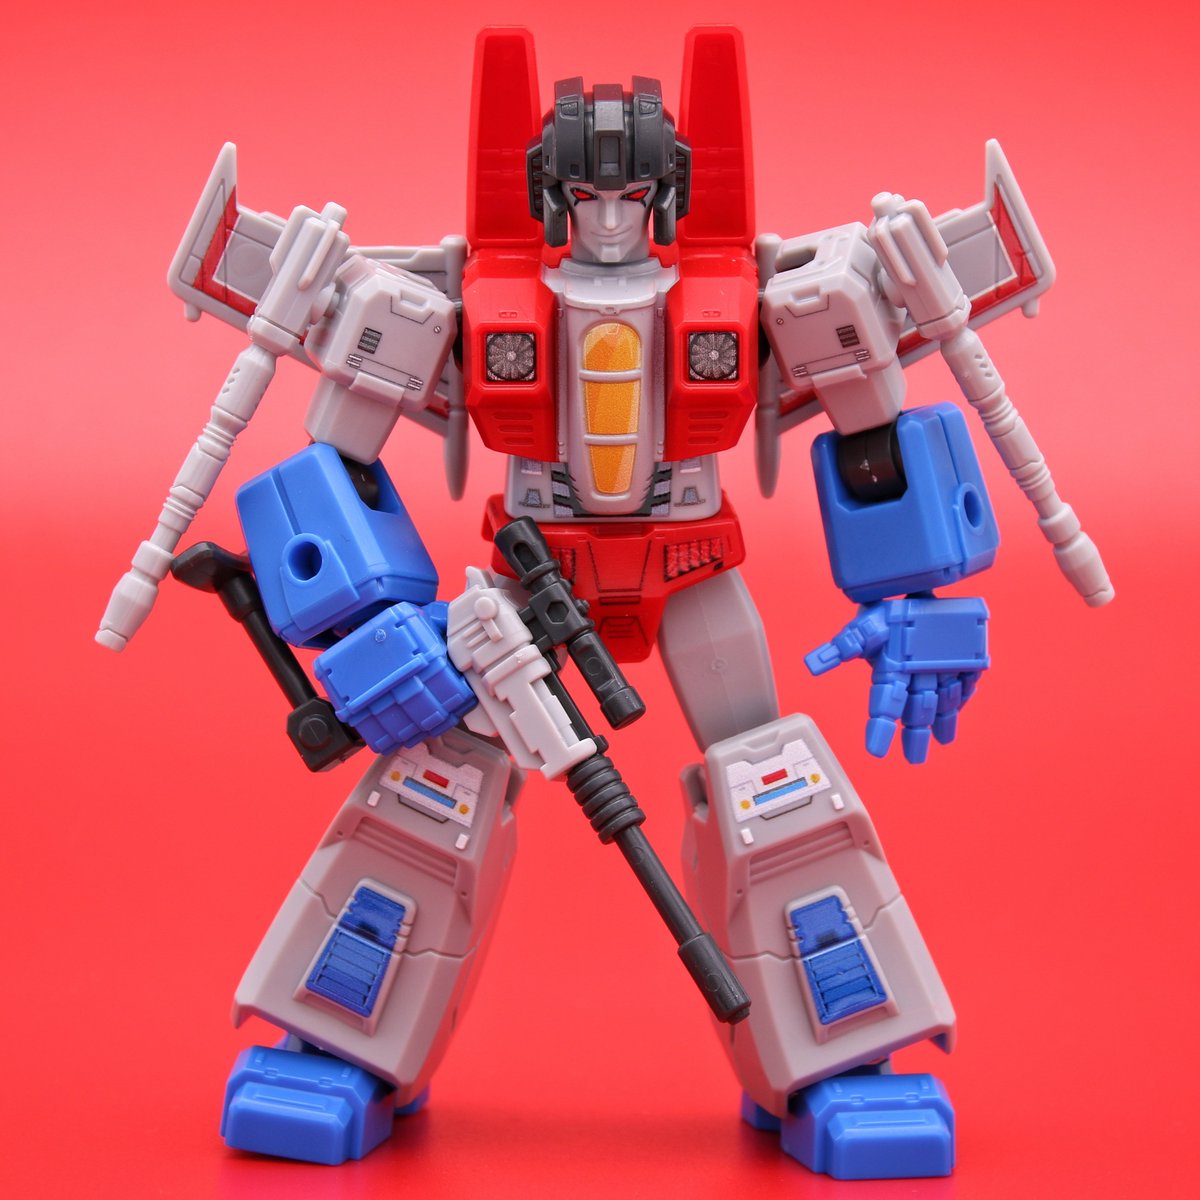 Blokees Starscream!

#transformers #toyphotography